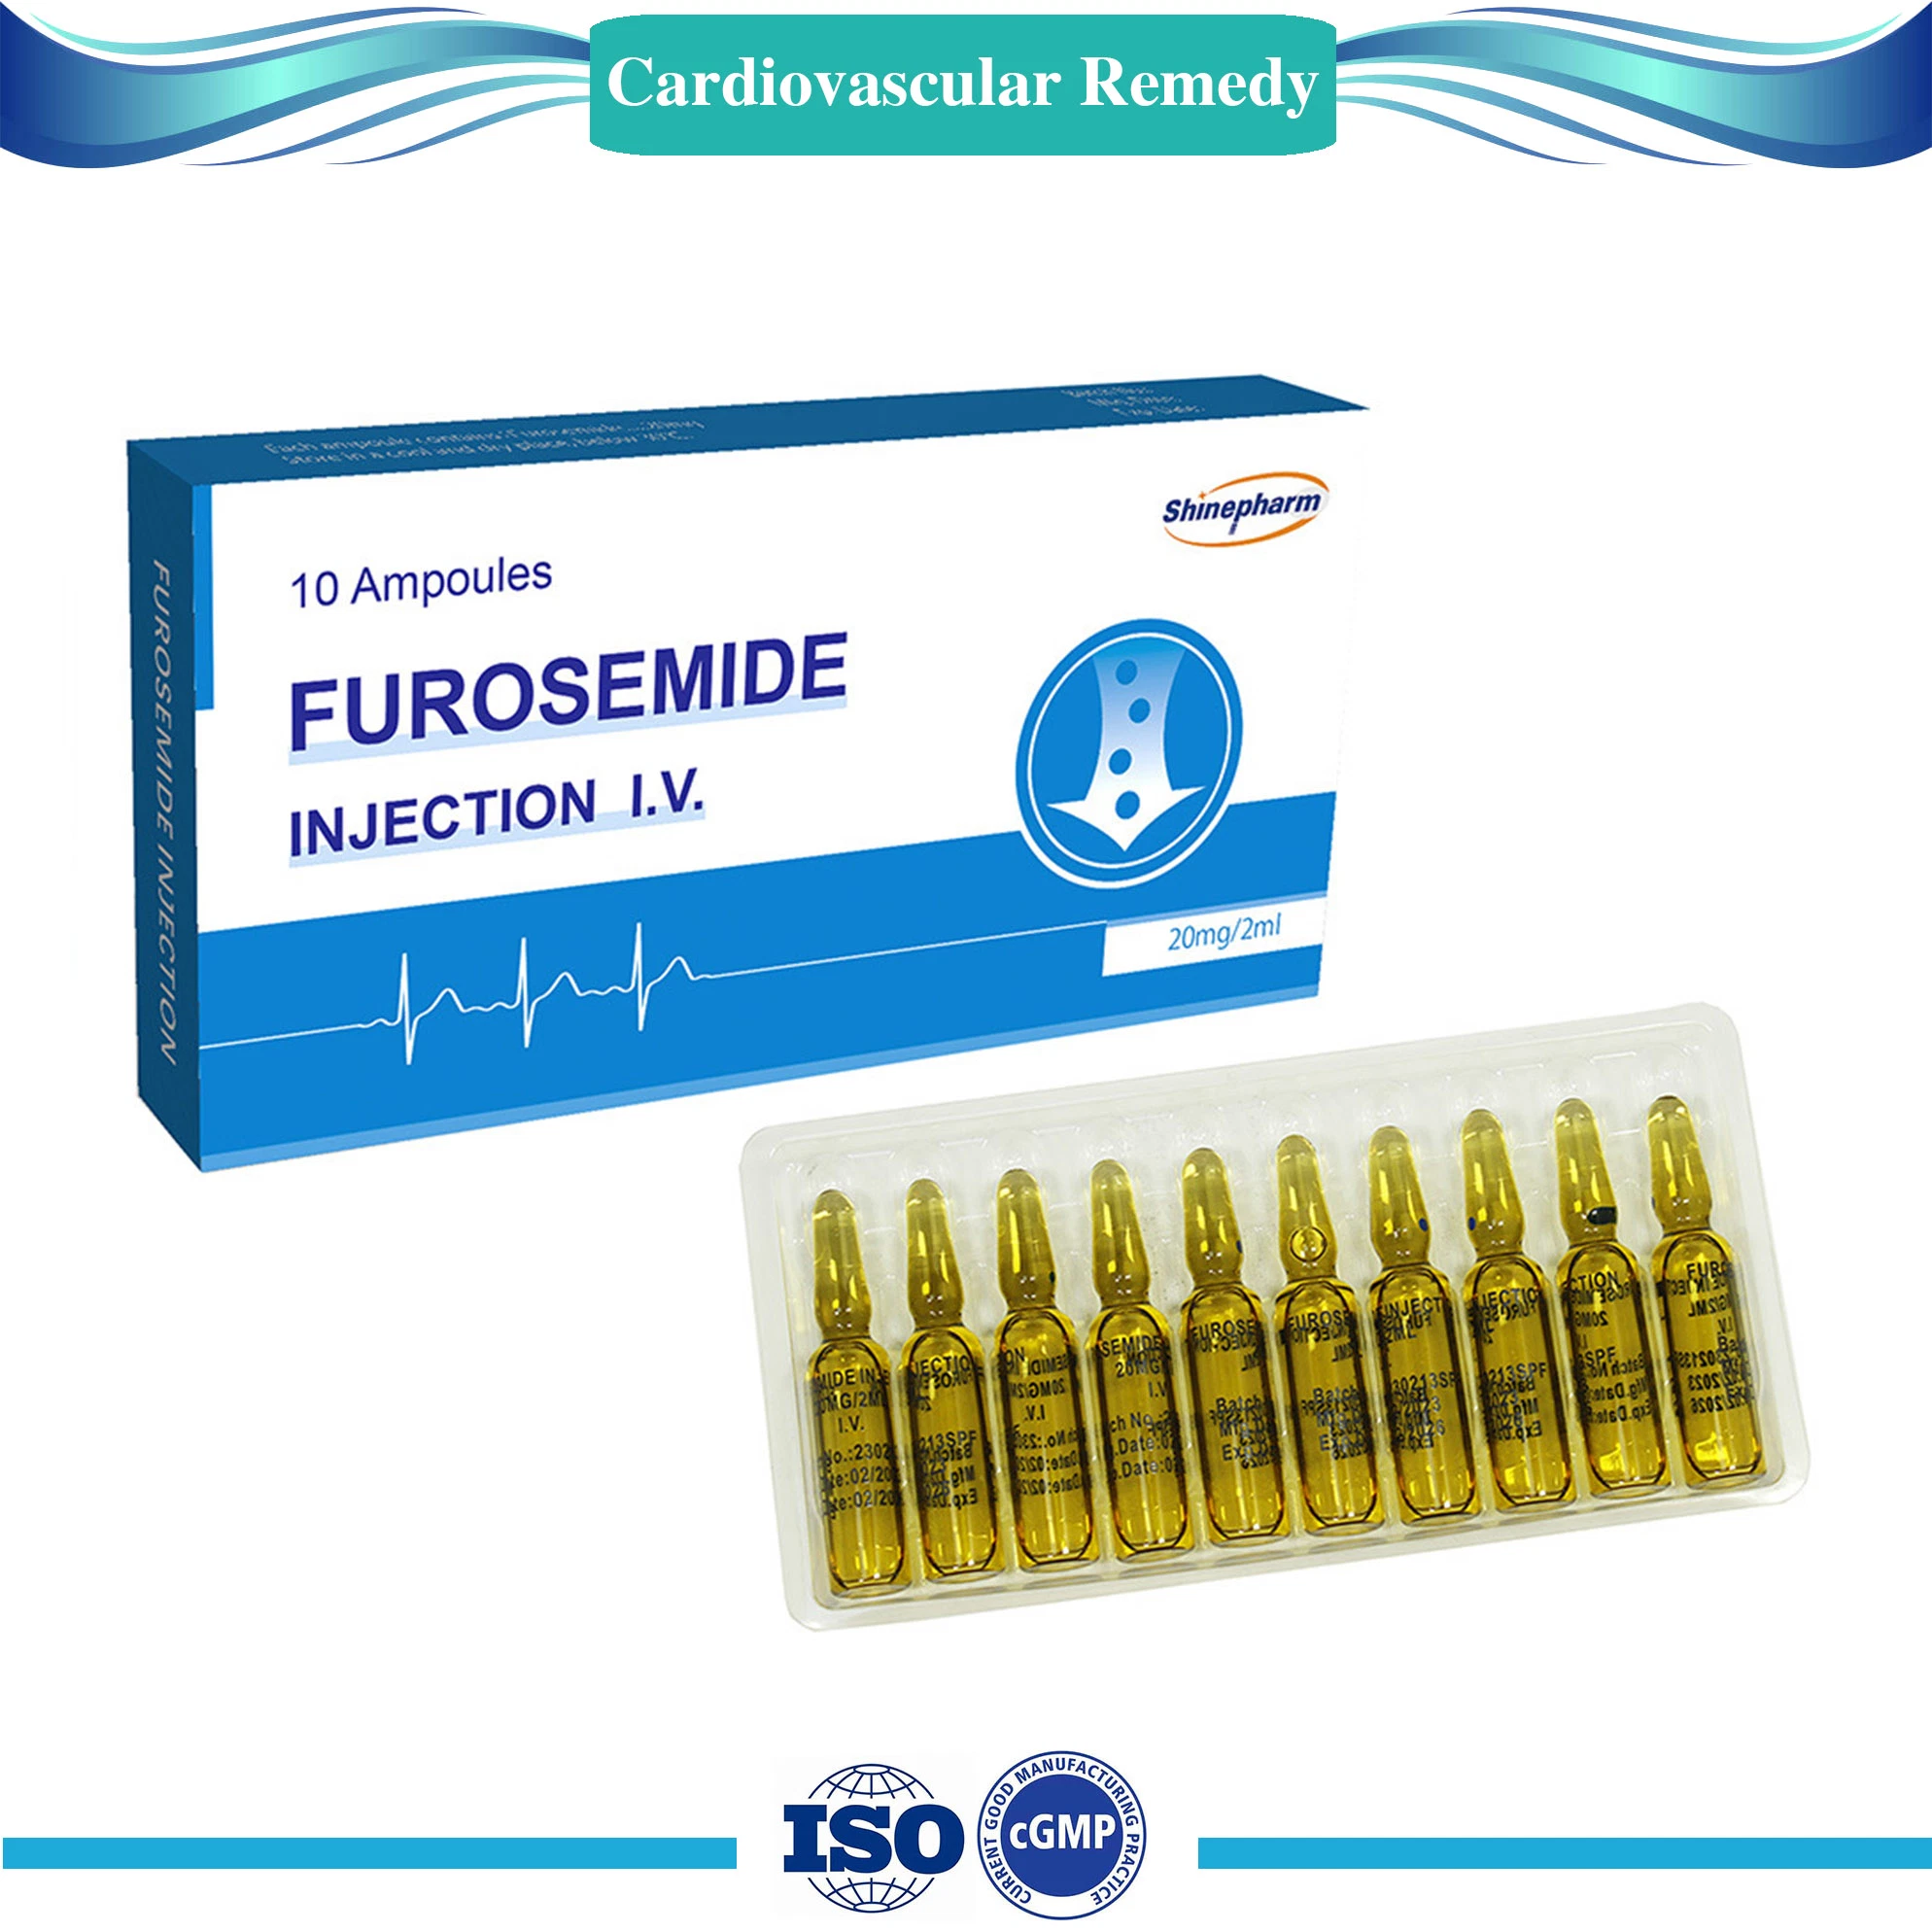 20mg/2ml Furosemide Injection, Cardiovascular Remedy Medicine